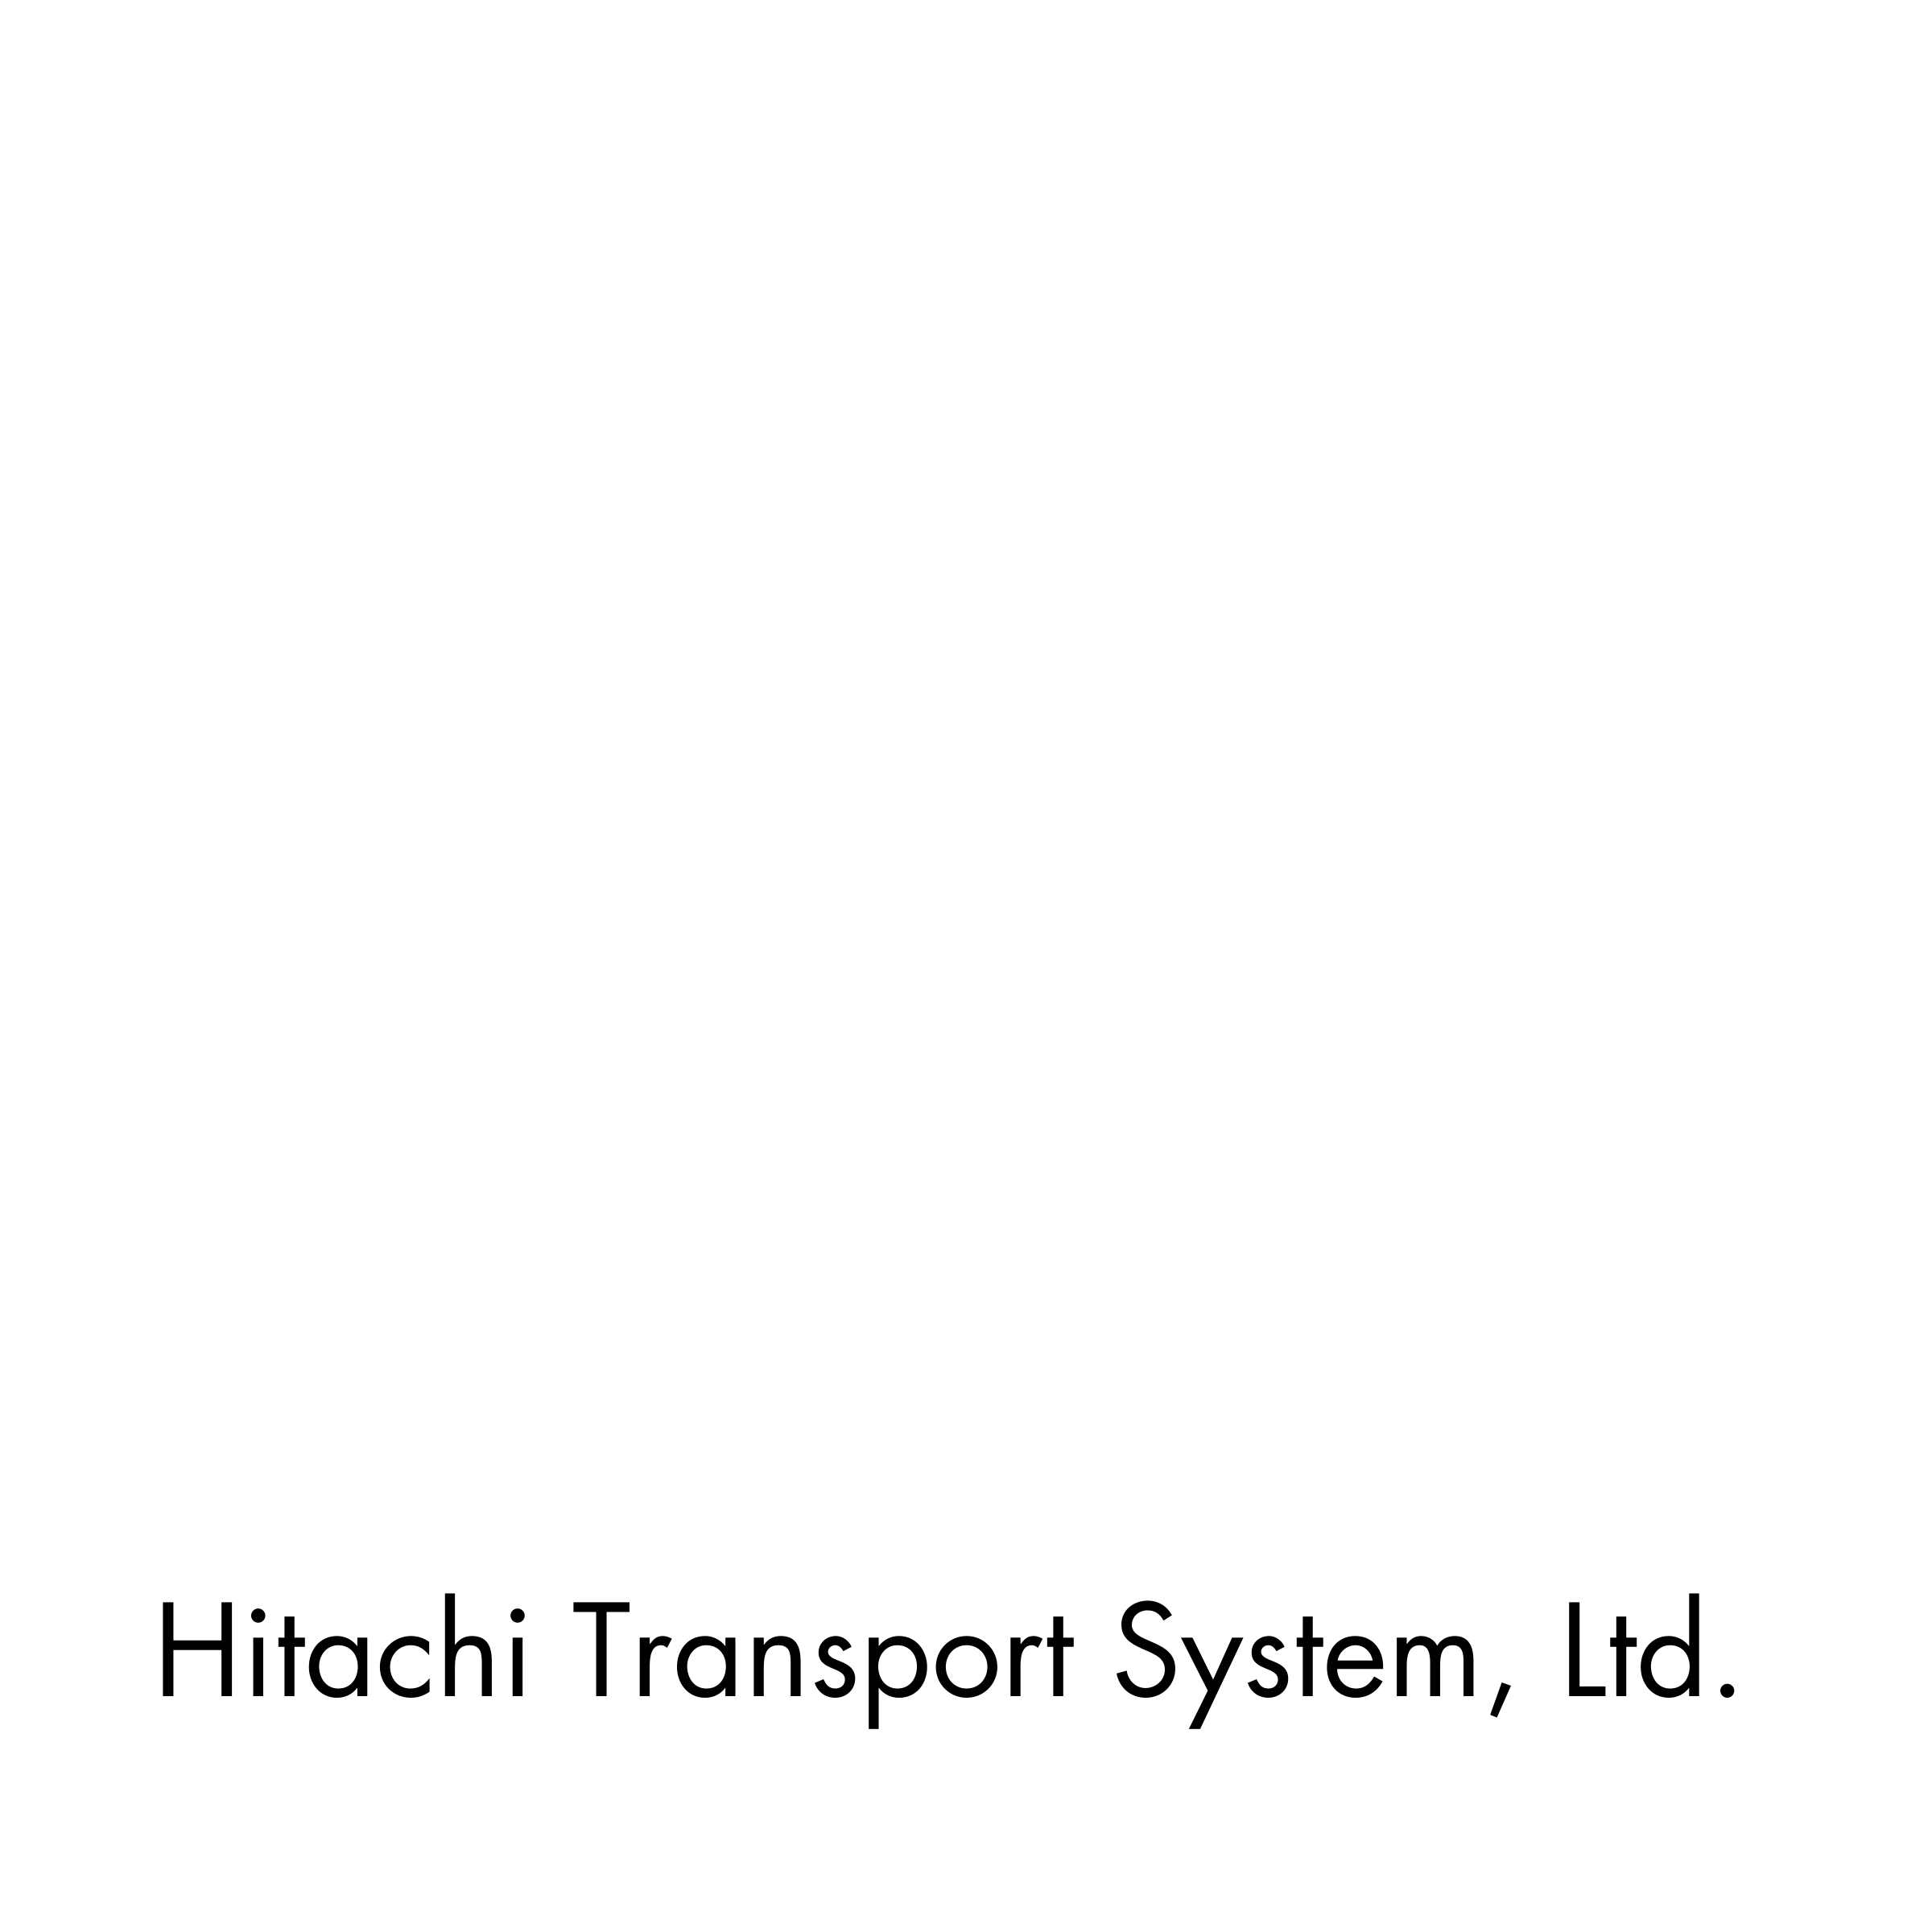 Hitachi White Logo - Hitachi Transport System Logo PNG Transparent & SVG Vector